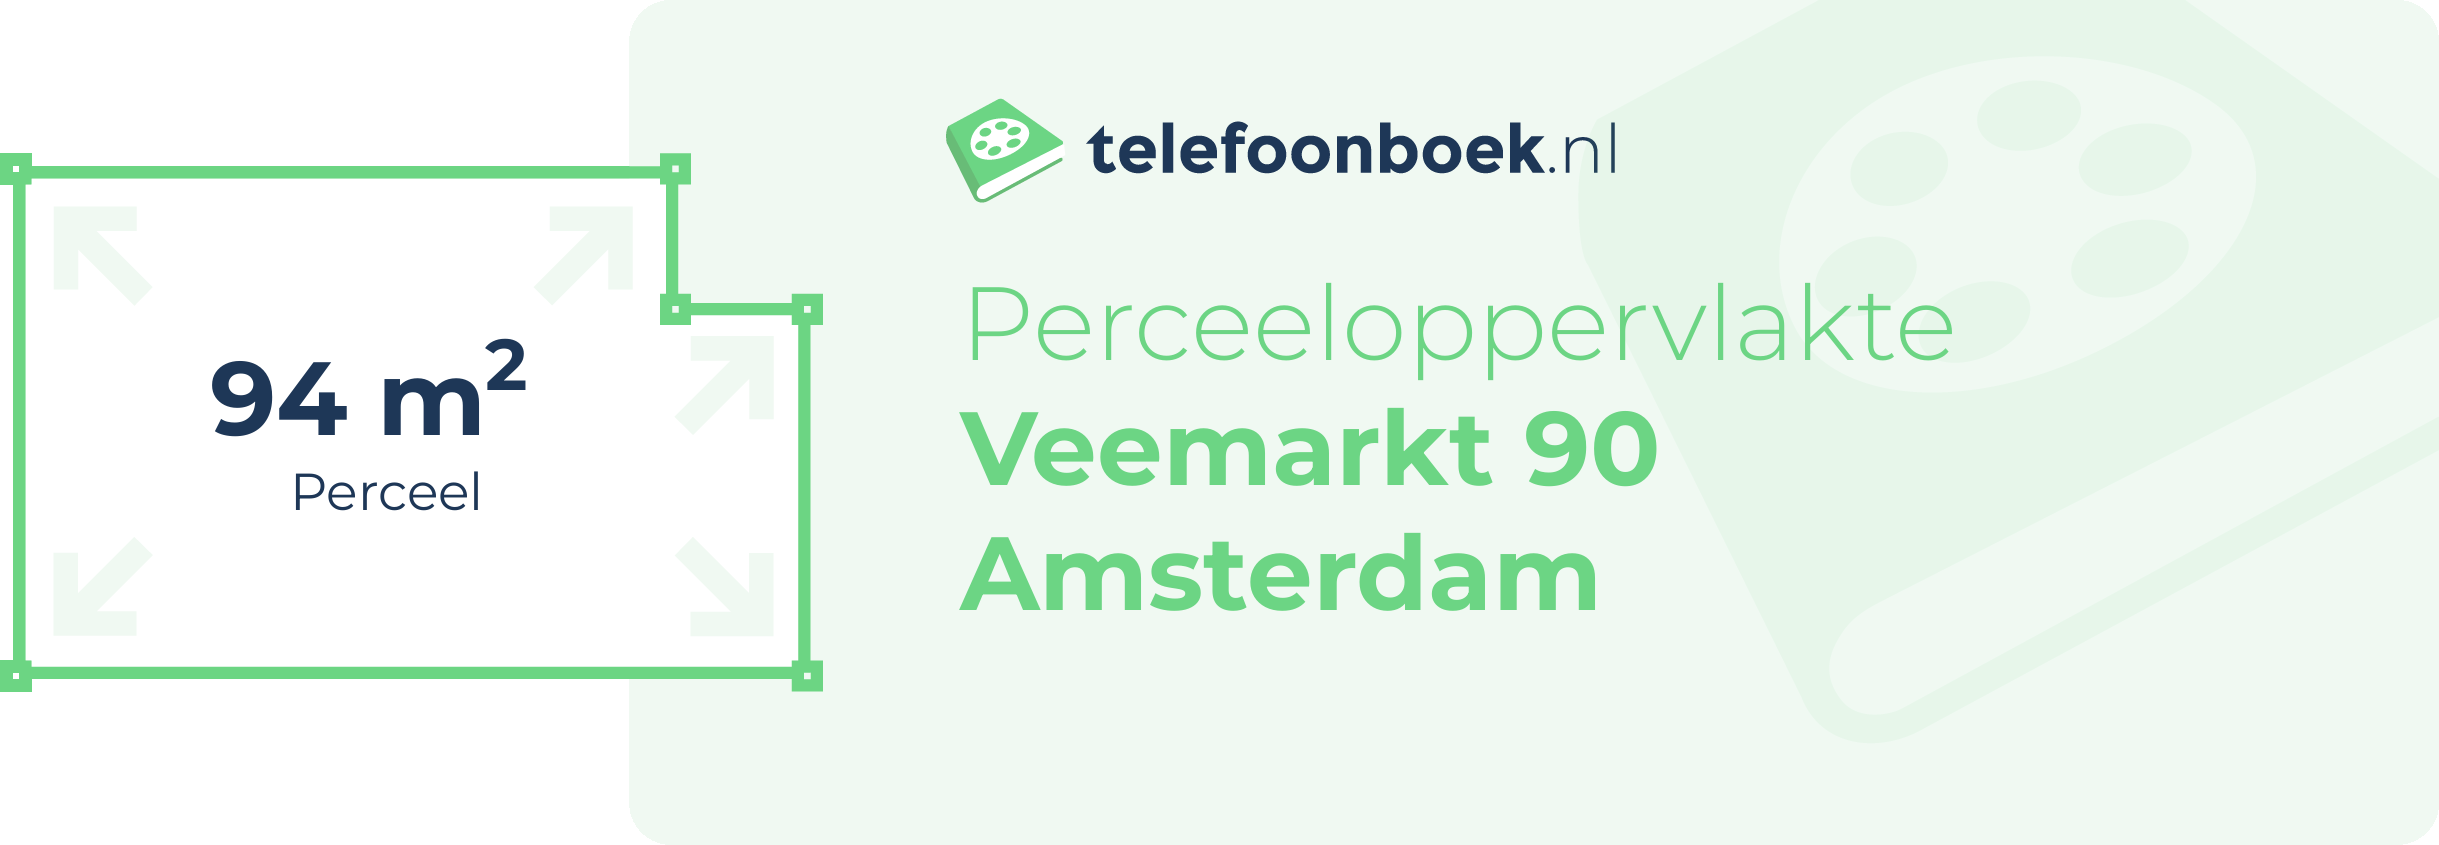 Perceeloppervlakte Veemarkt 90 Amsterdam